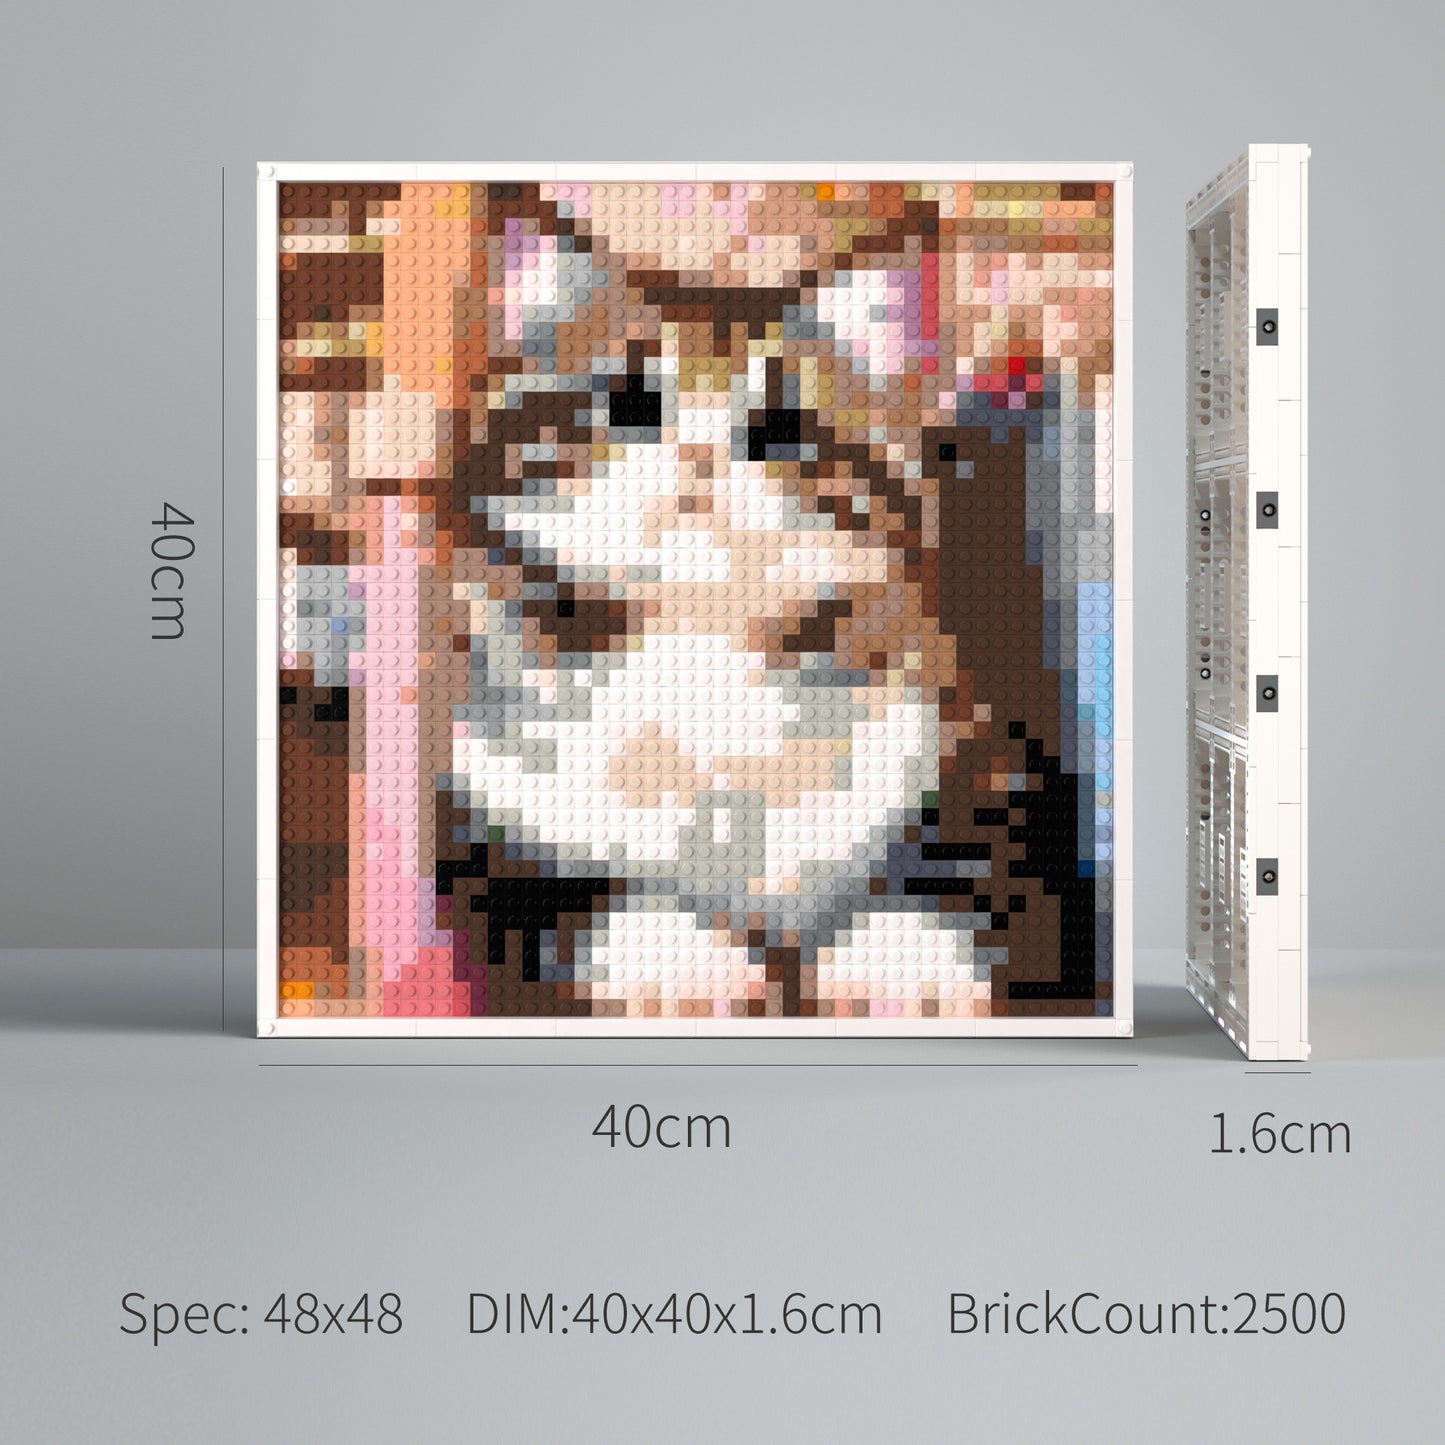 Cat Photo Compatible Lego Brick Pixel Art with Frame - 40*40*1.6cm